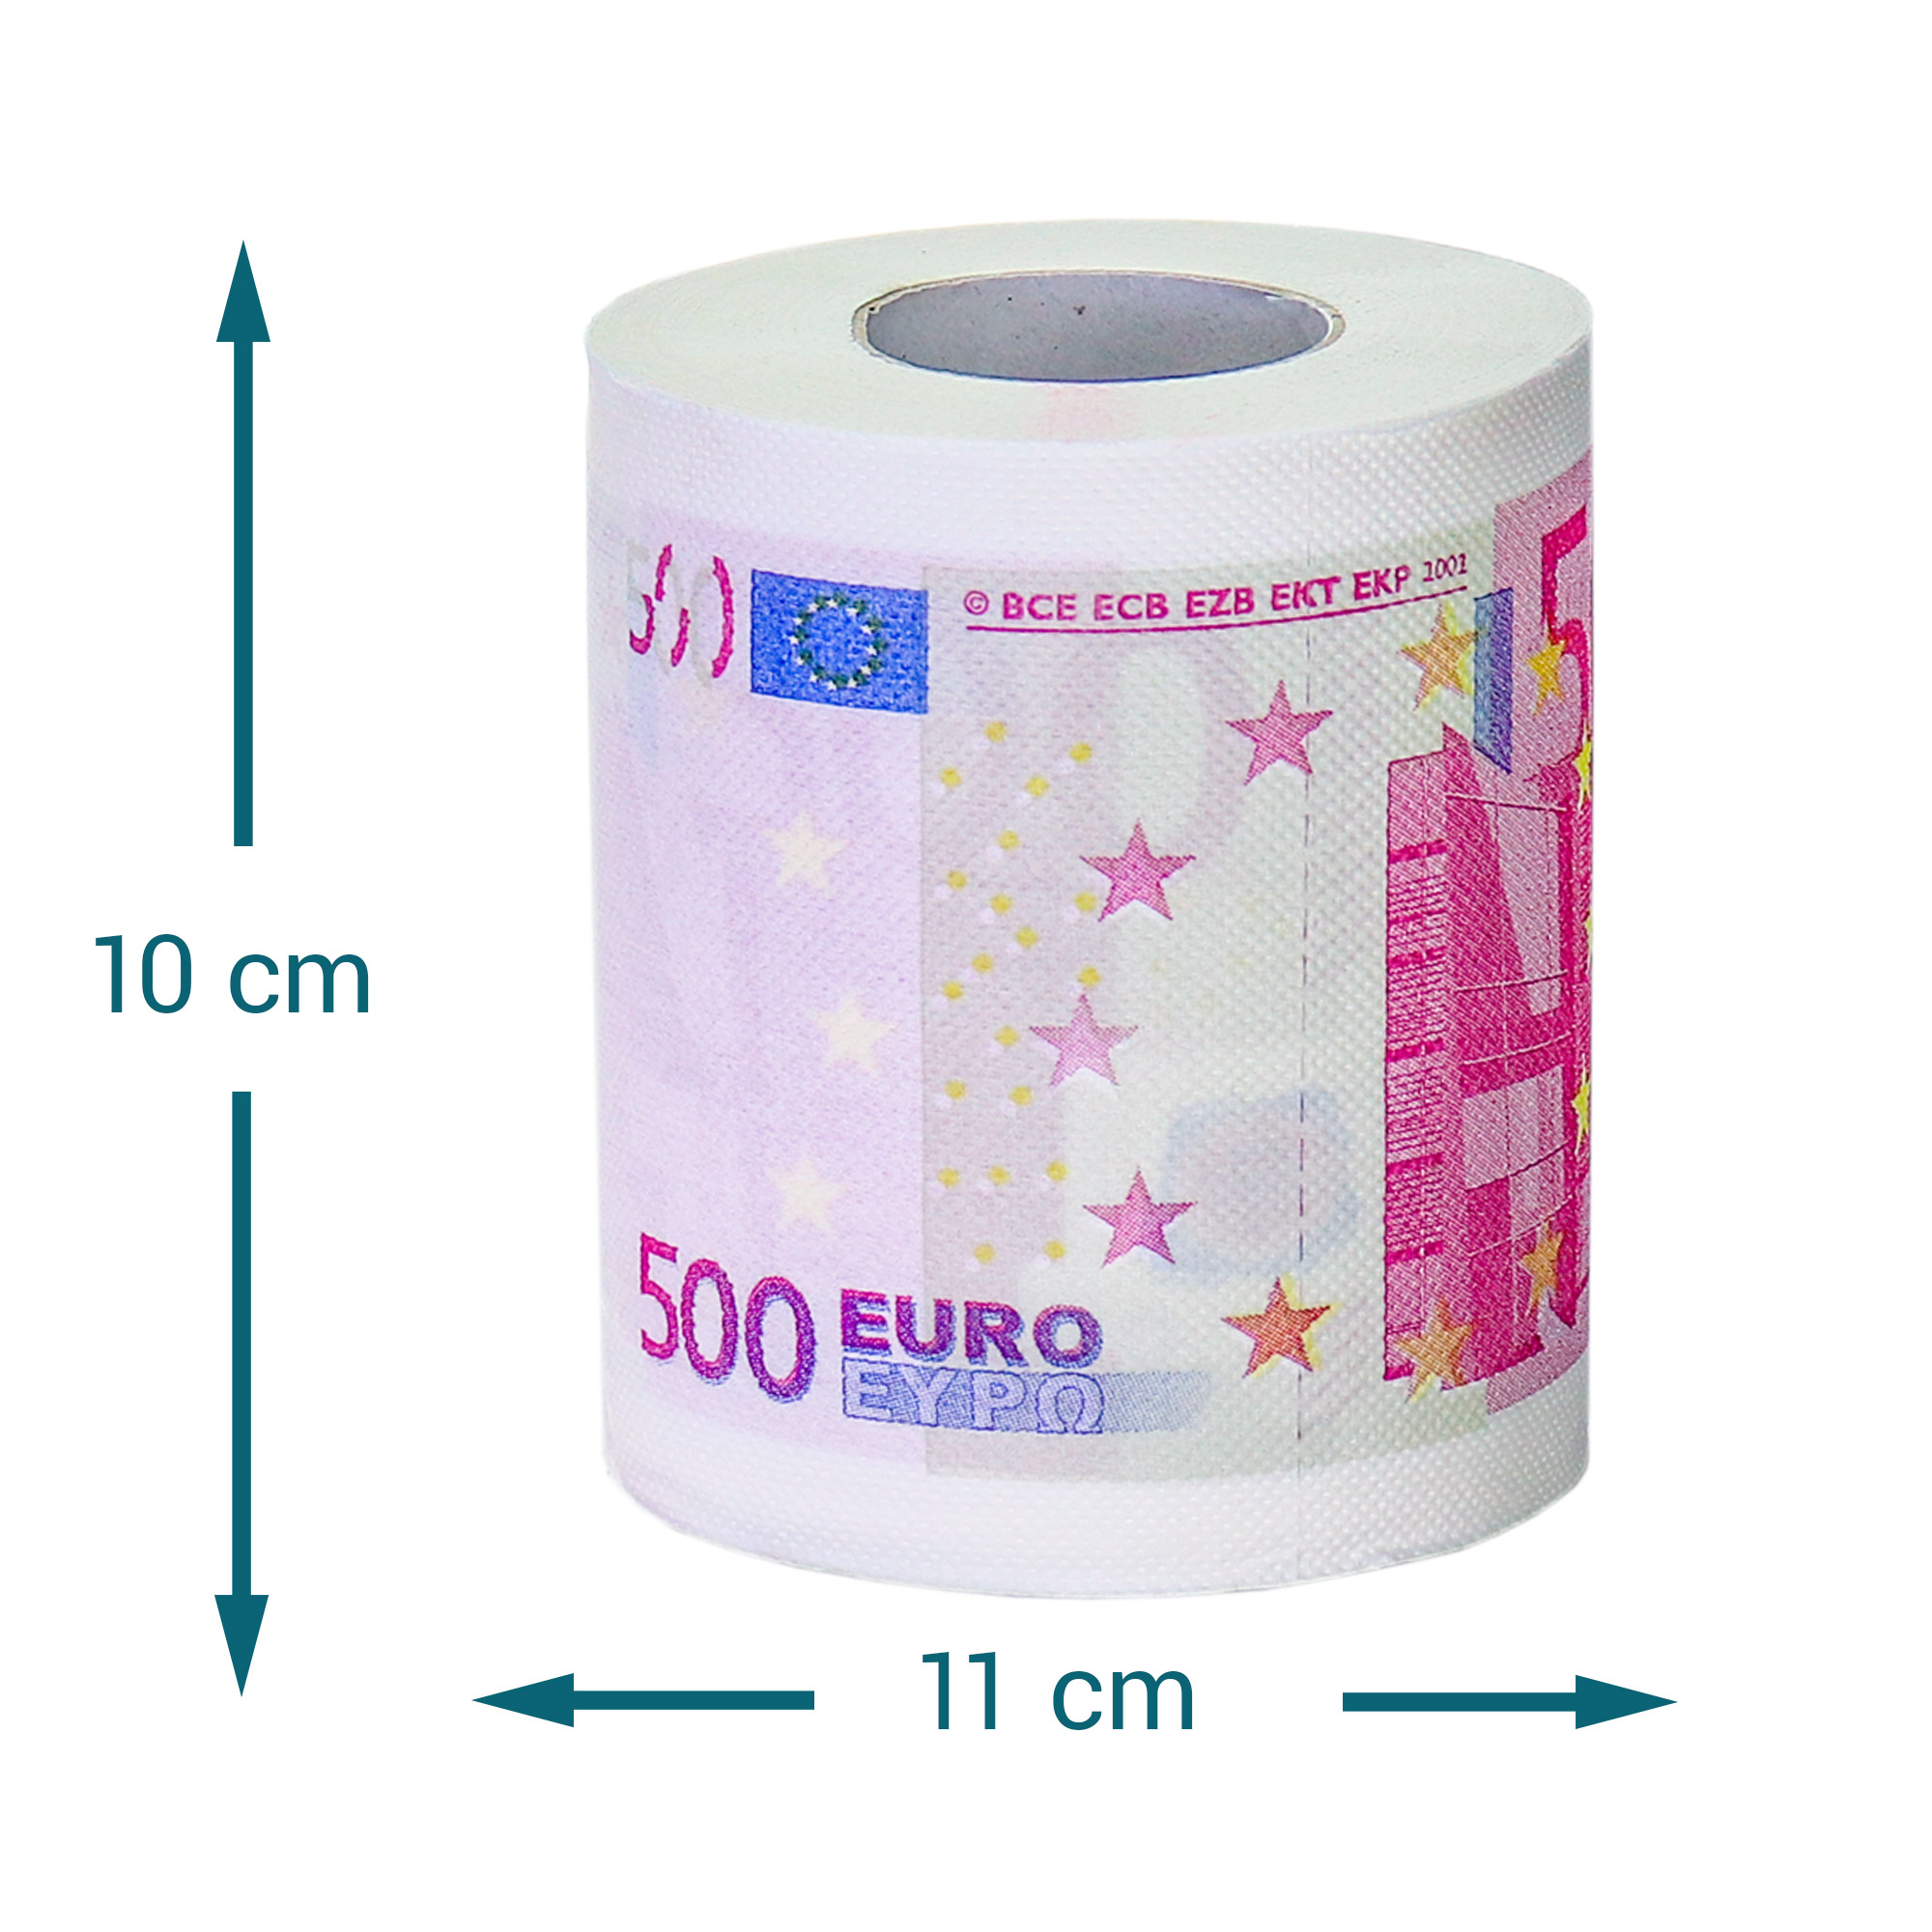 Geld Toilettenpapier - 500 Euro - 2er Set 4127 - 7